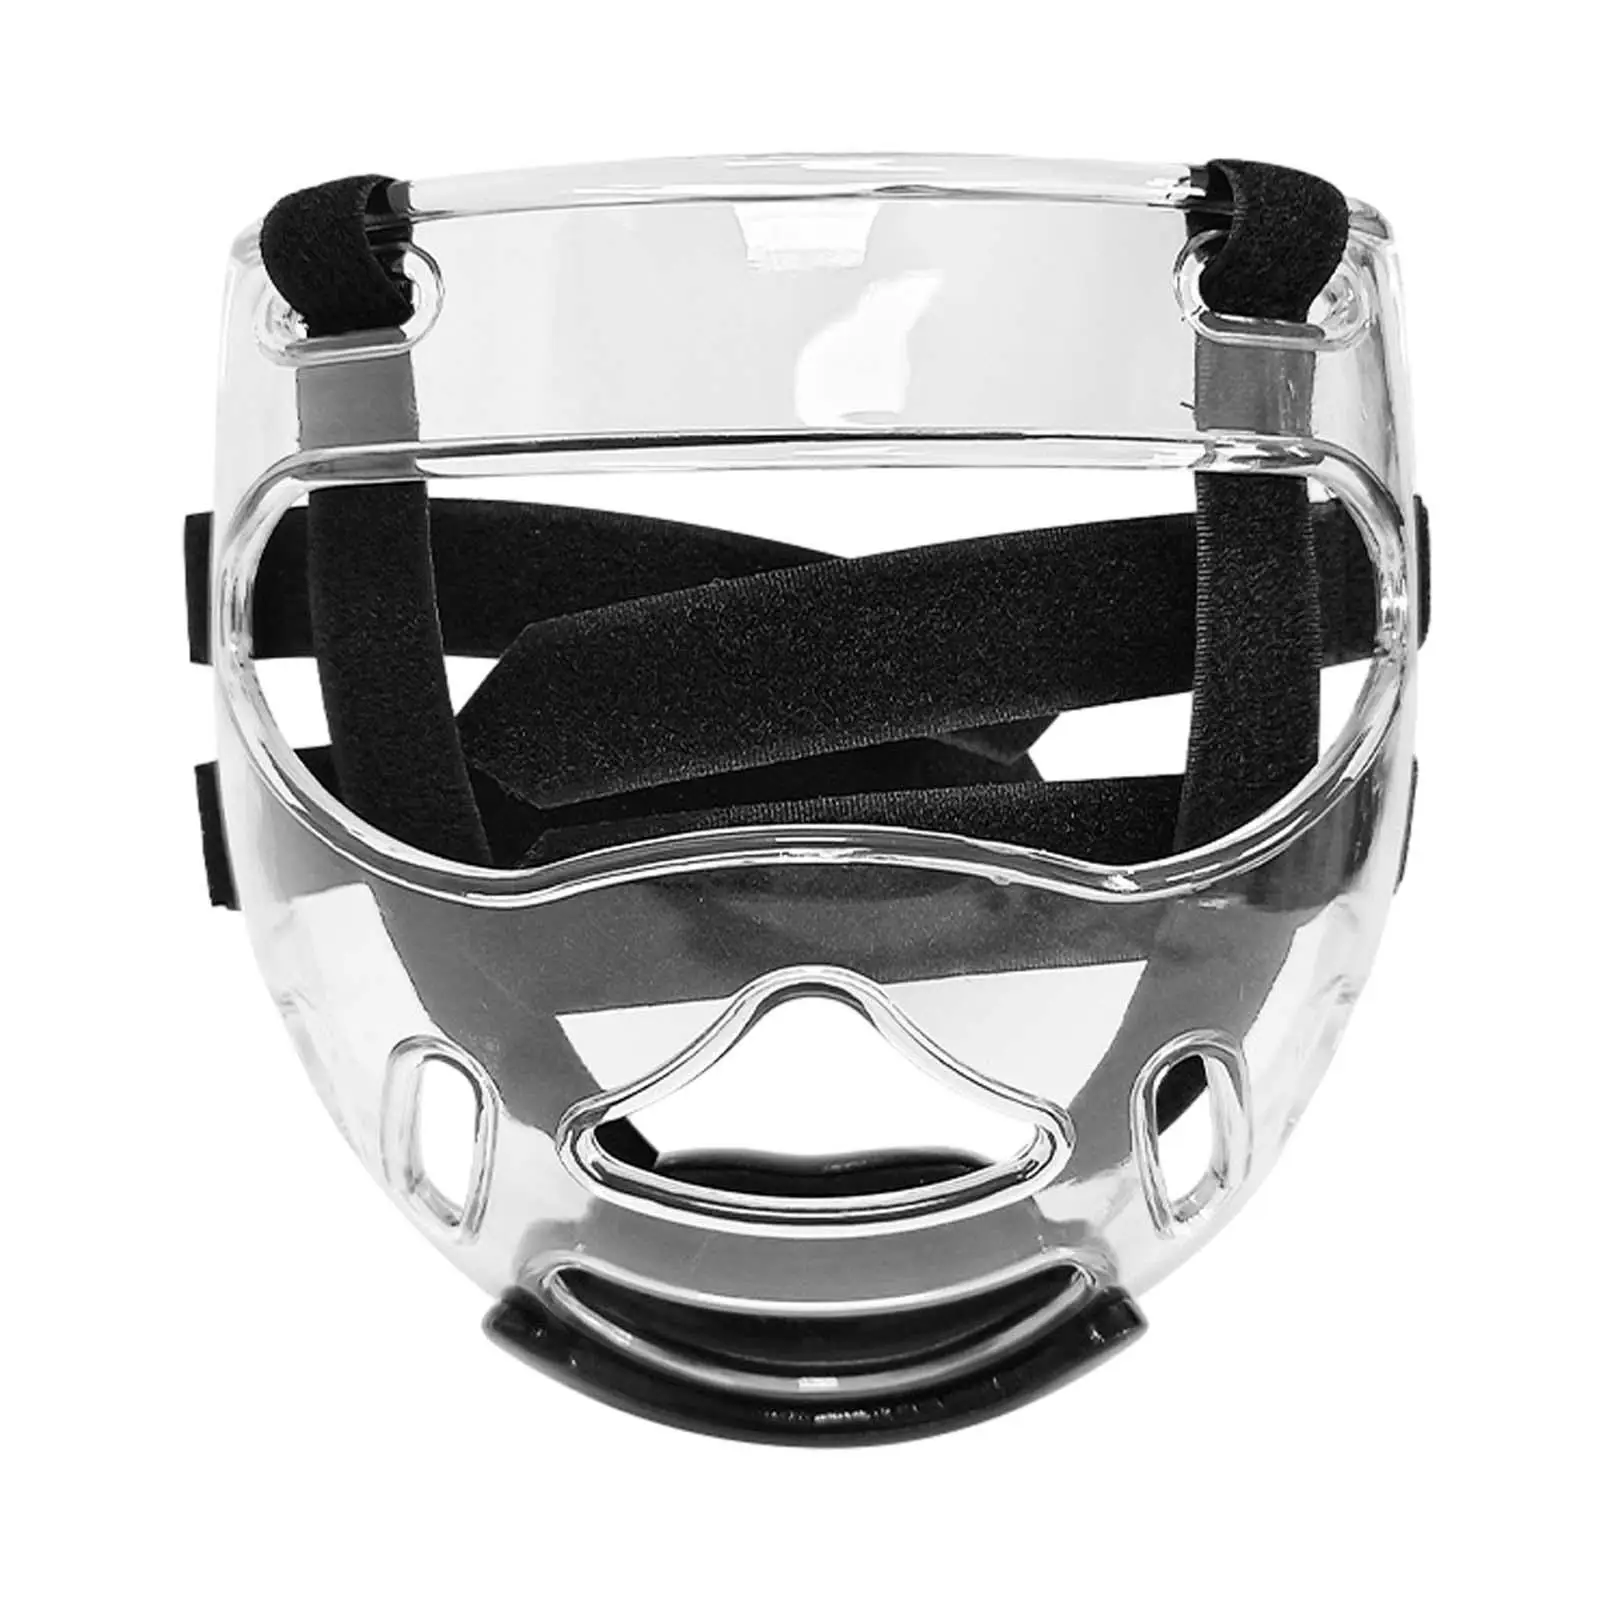 Taekwondo Mask Taekwondo Face Shield Protector Boxing Headgear Head Cover for Kickboxing Wrestling Sports Sanda Martial Arts